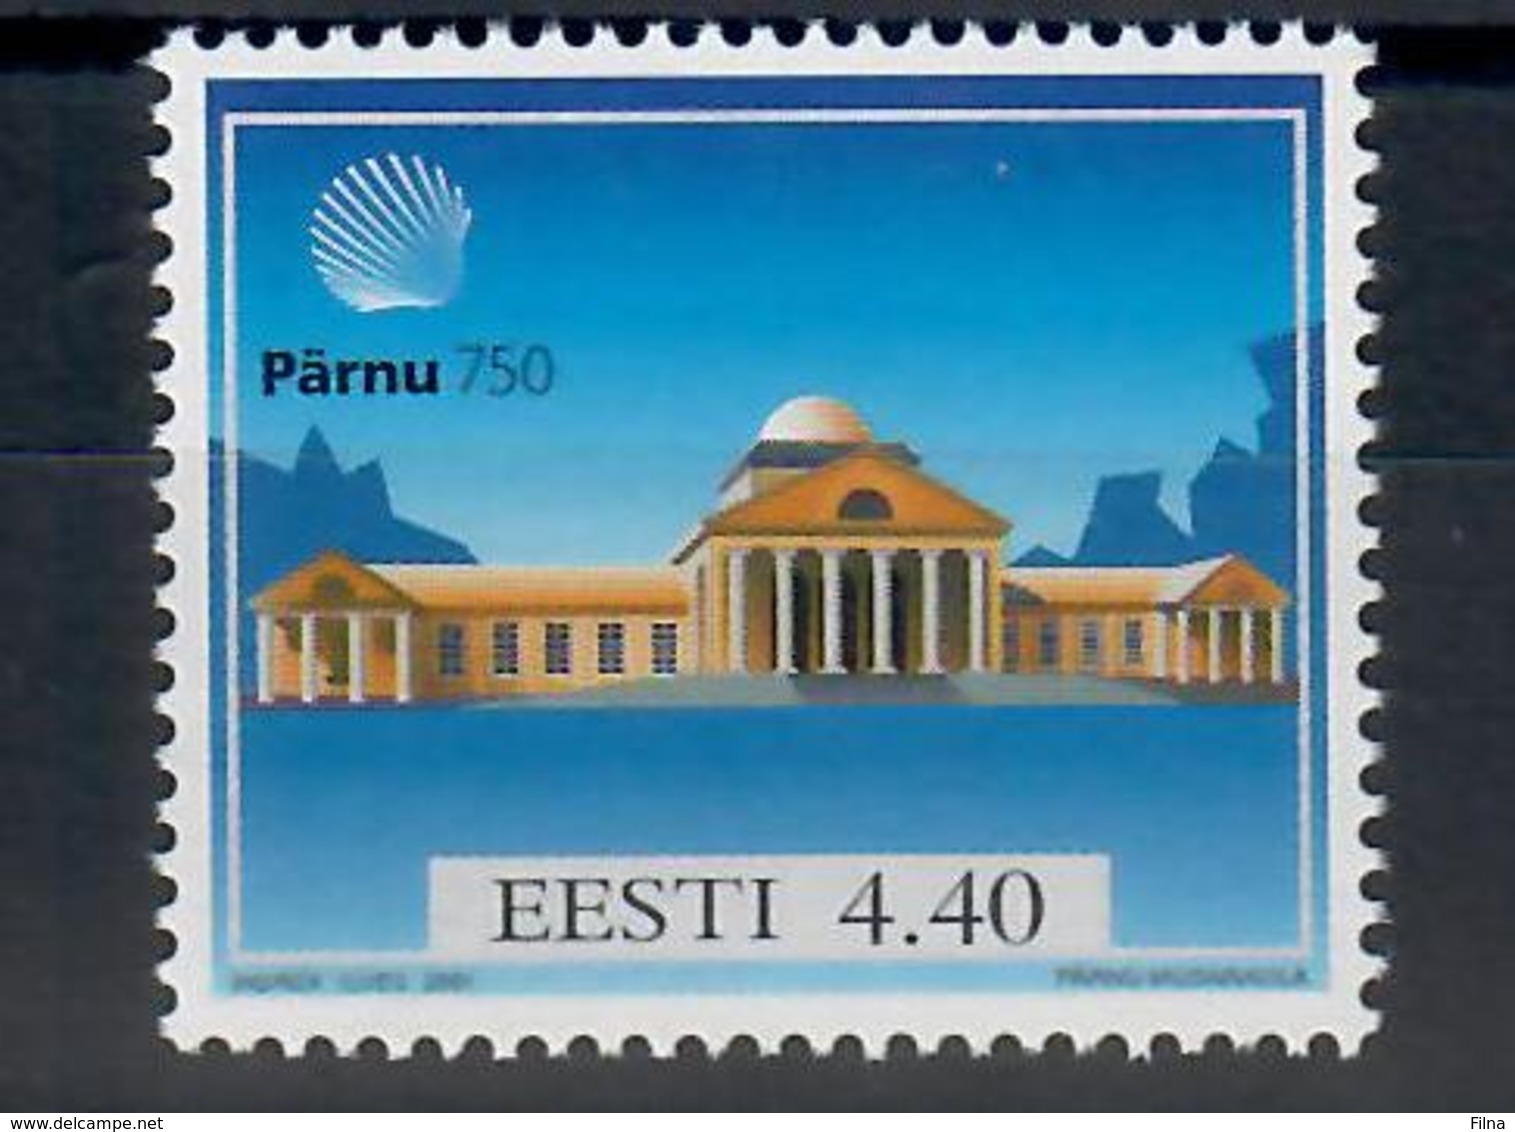 ESTONIA 2001 - 750° ANNIVERSARIO DI PARNU - MNH ** - Estonia